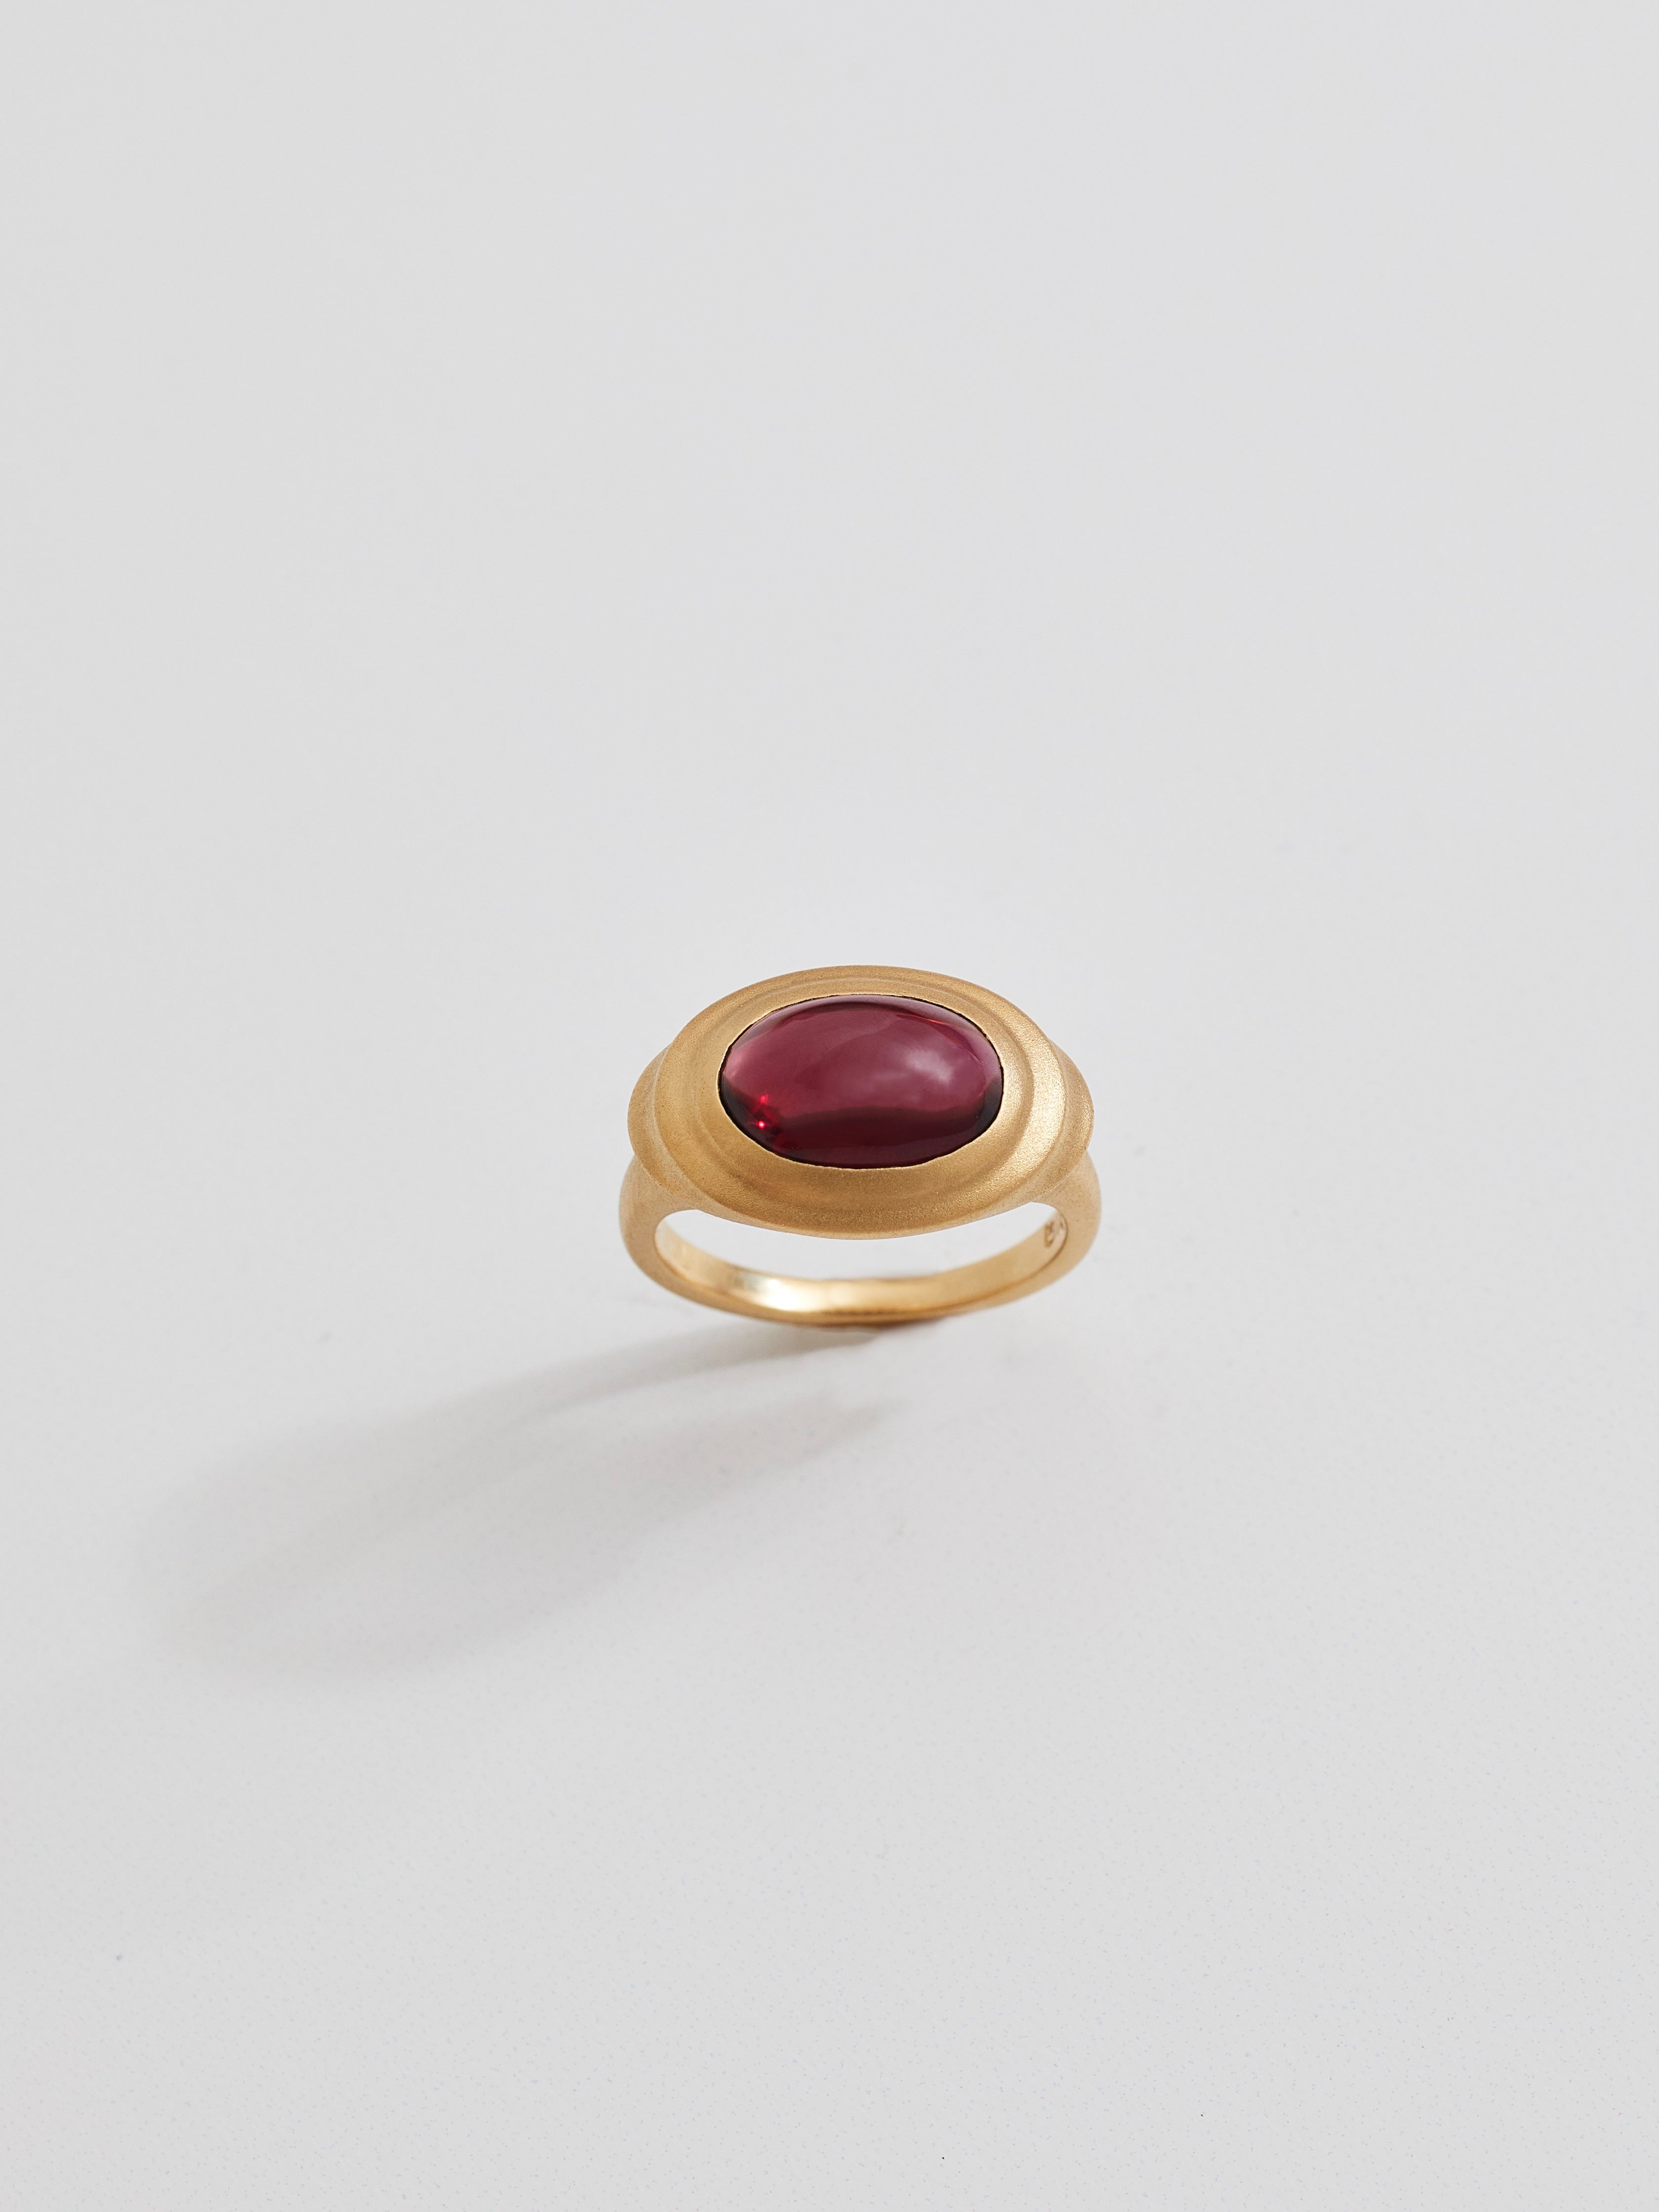 Rhodolite Màre Ring in 18k Royal Gold, Size 8